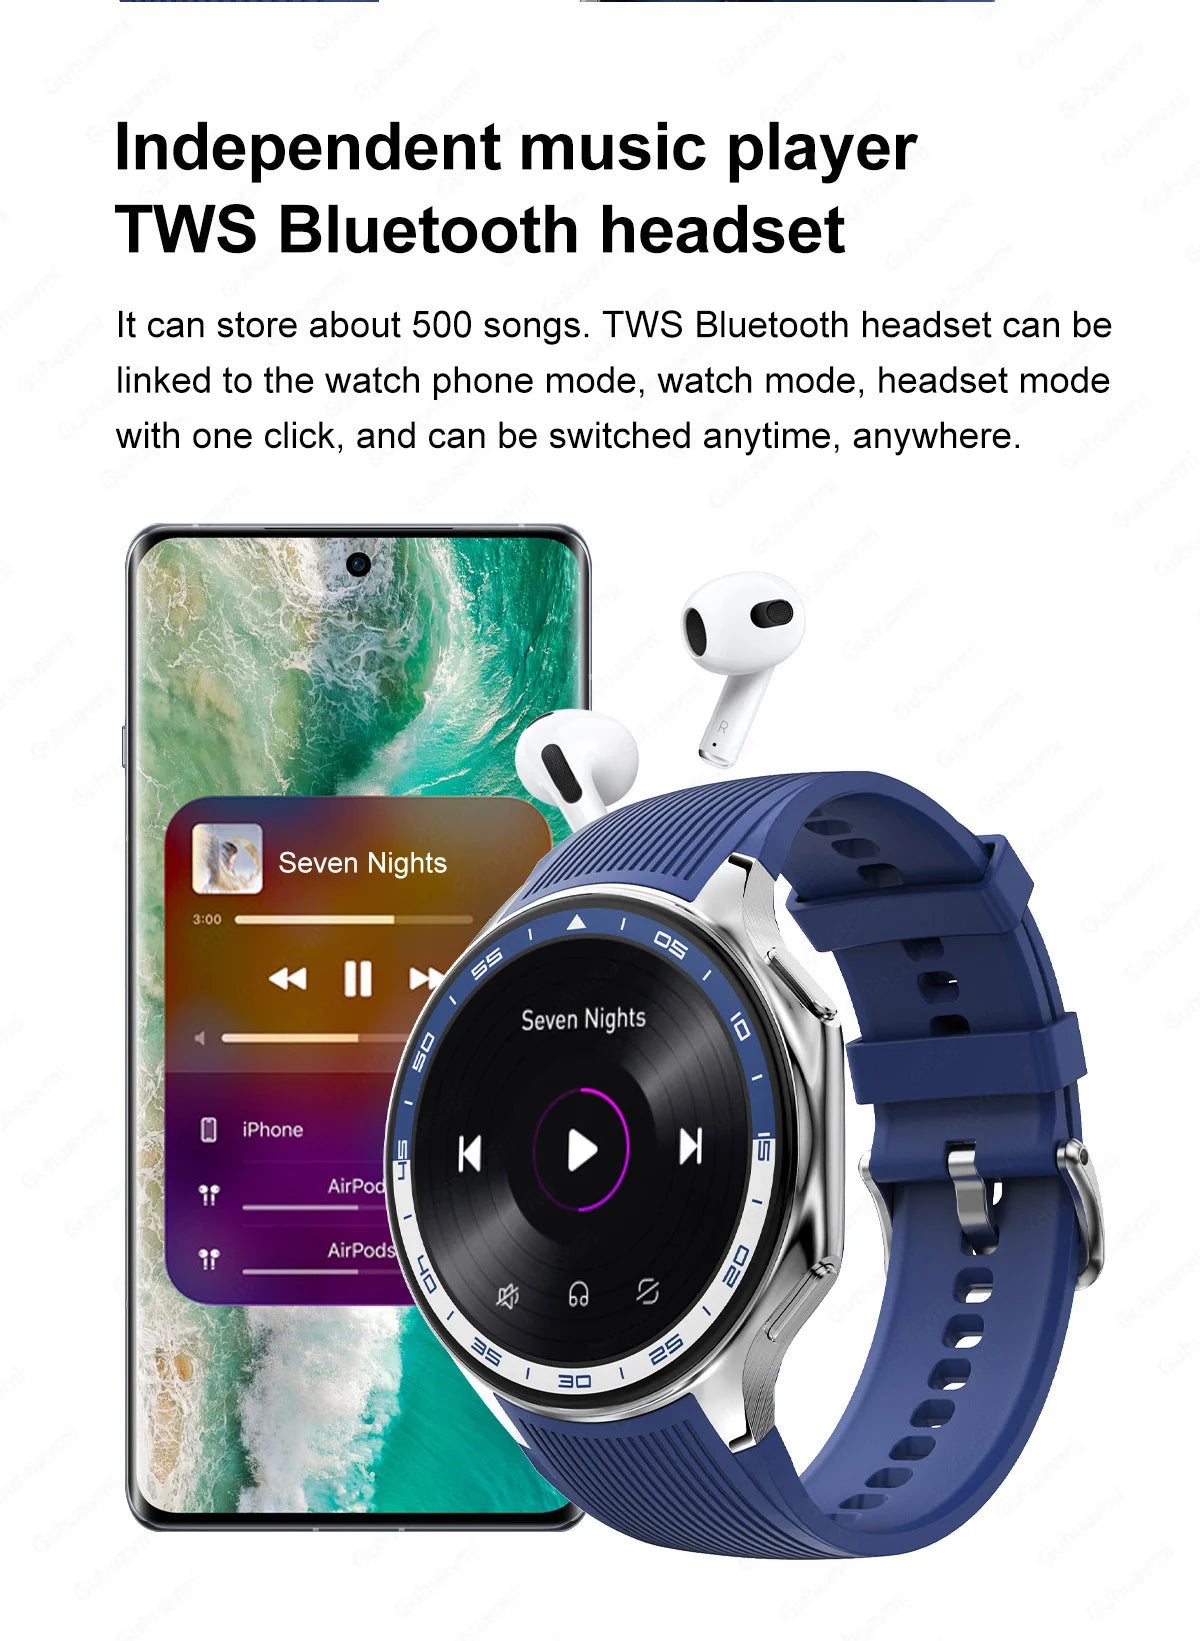 Smart Watch X